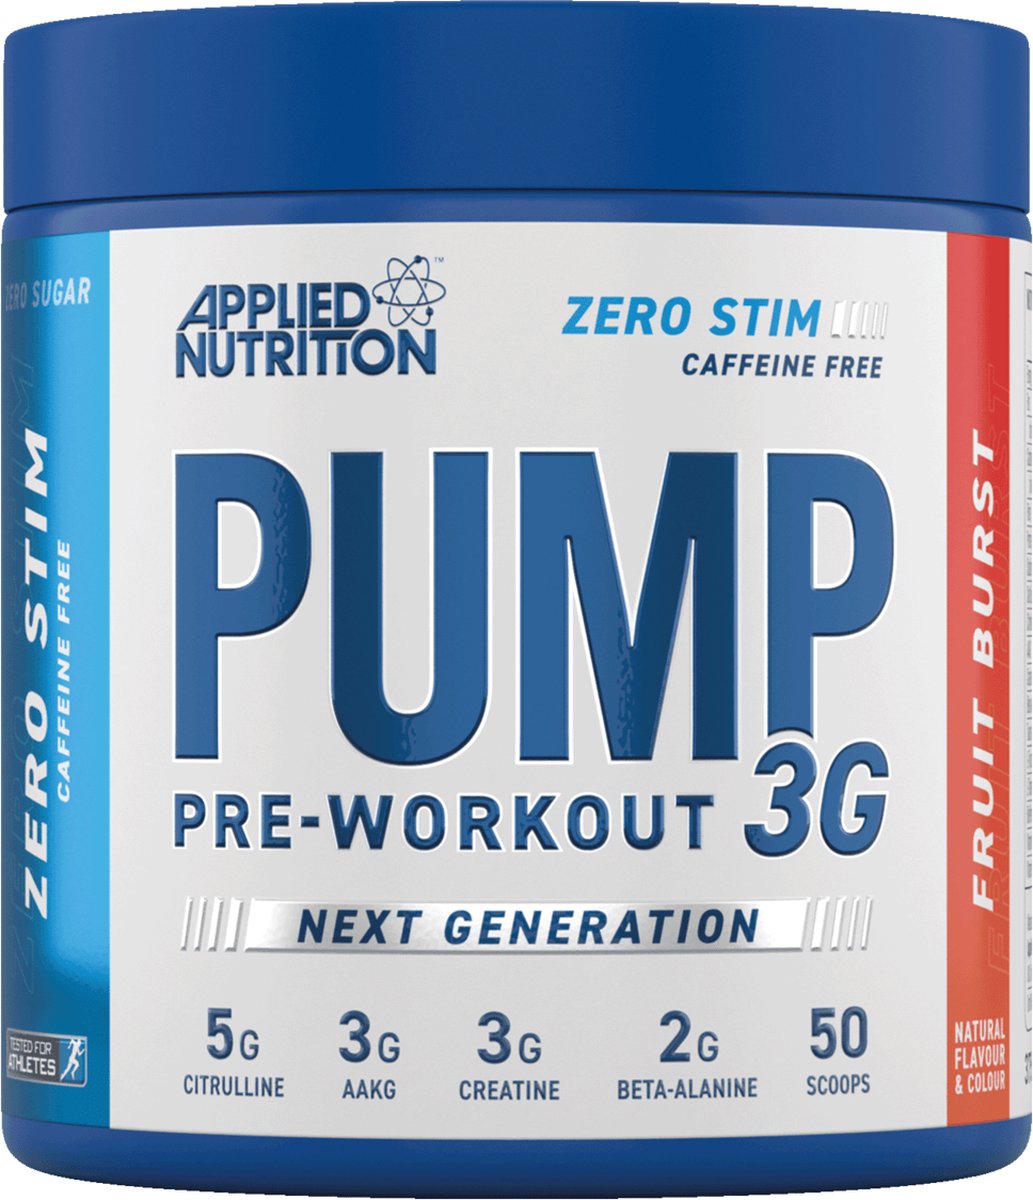 Applied Nutrition - Pump 3G ZERO STIM Pre-Workout (Fruit Burst - 375 gram) - Suikervrij